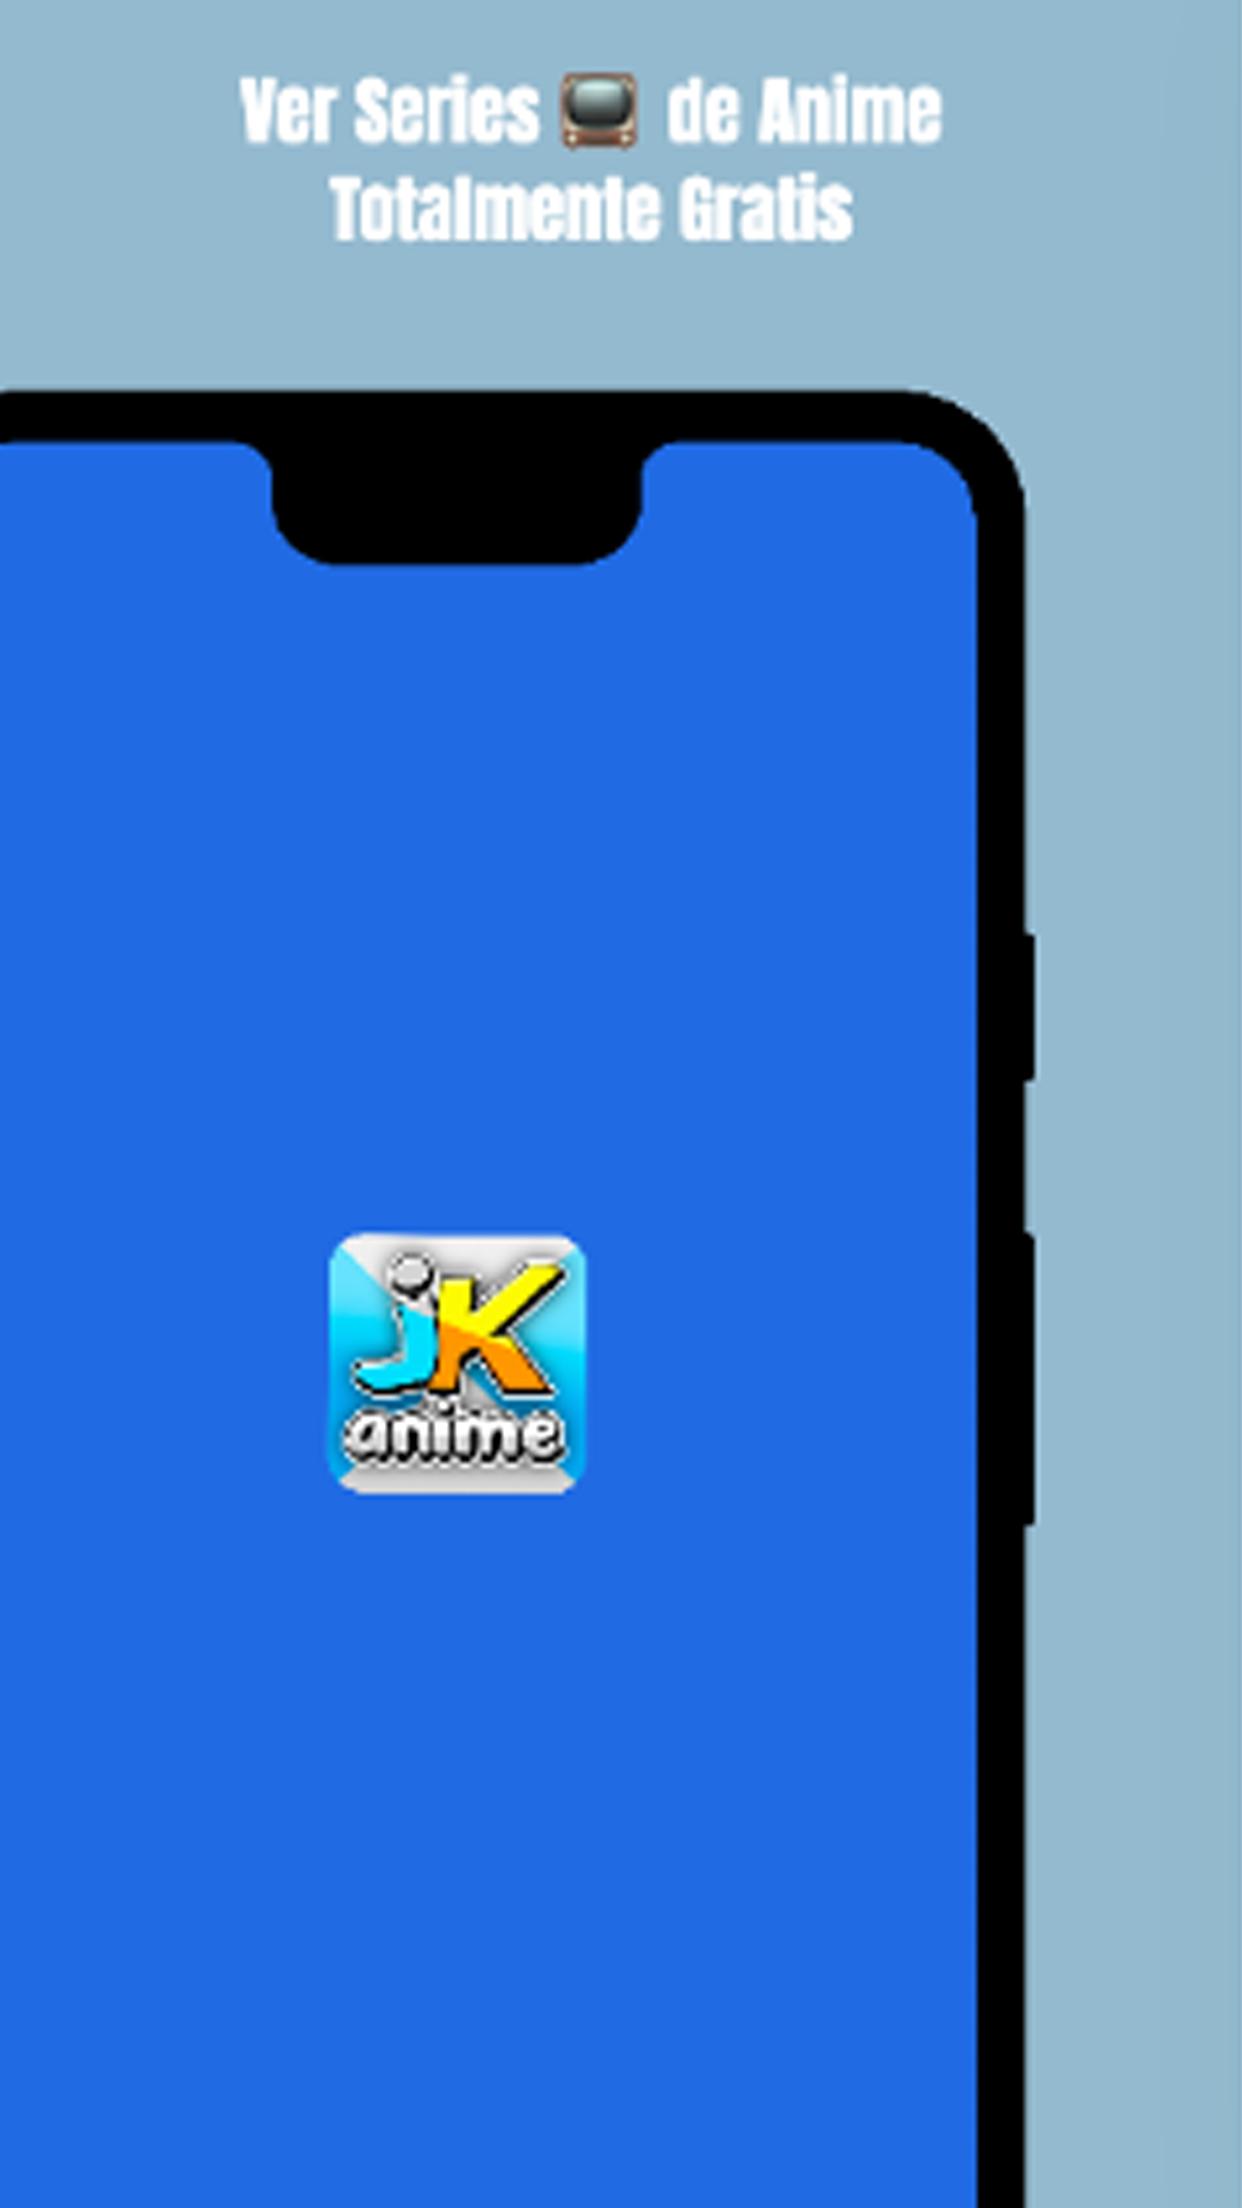 JKanime - Gratis for Android - APK Download